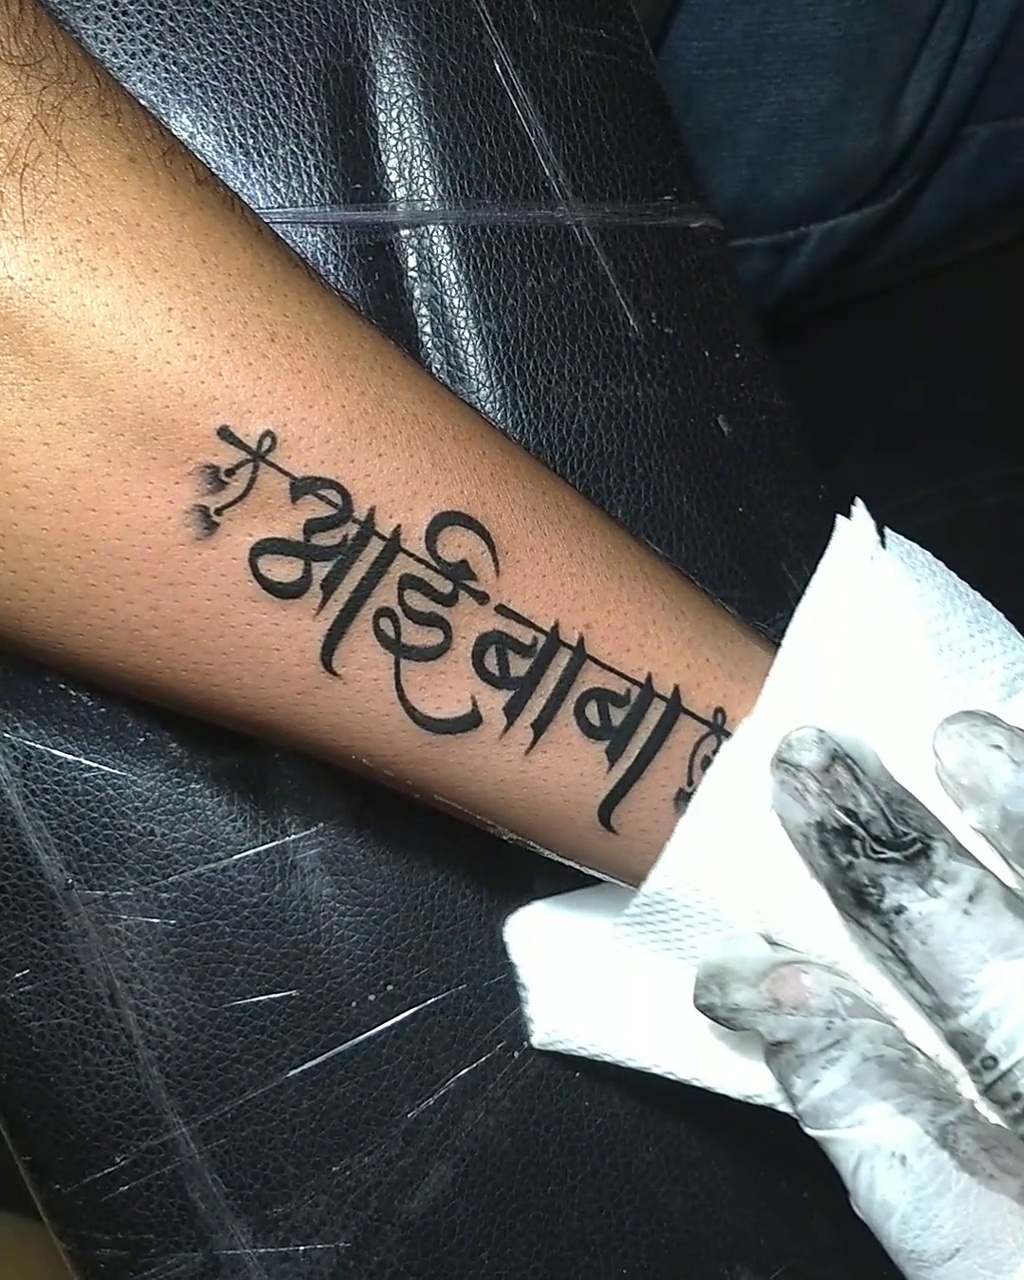 omnamashivaya trishul bhole rudraksha mahadev tattoo sumitambre   3531K Views  TikTok